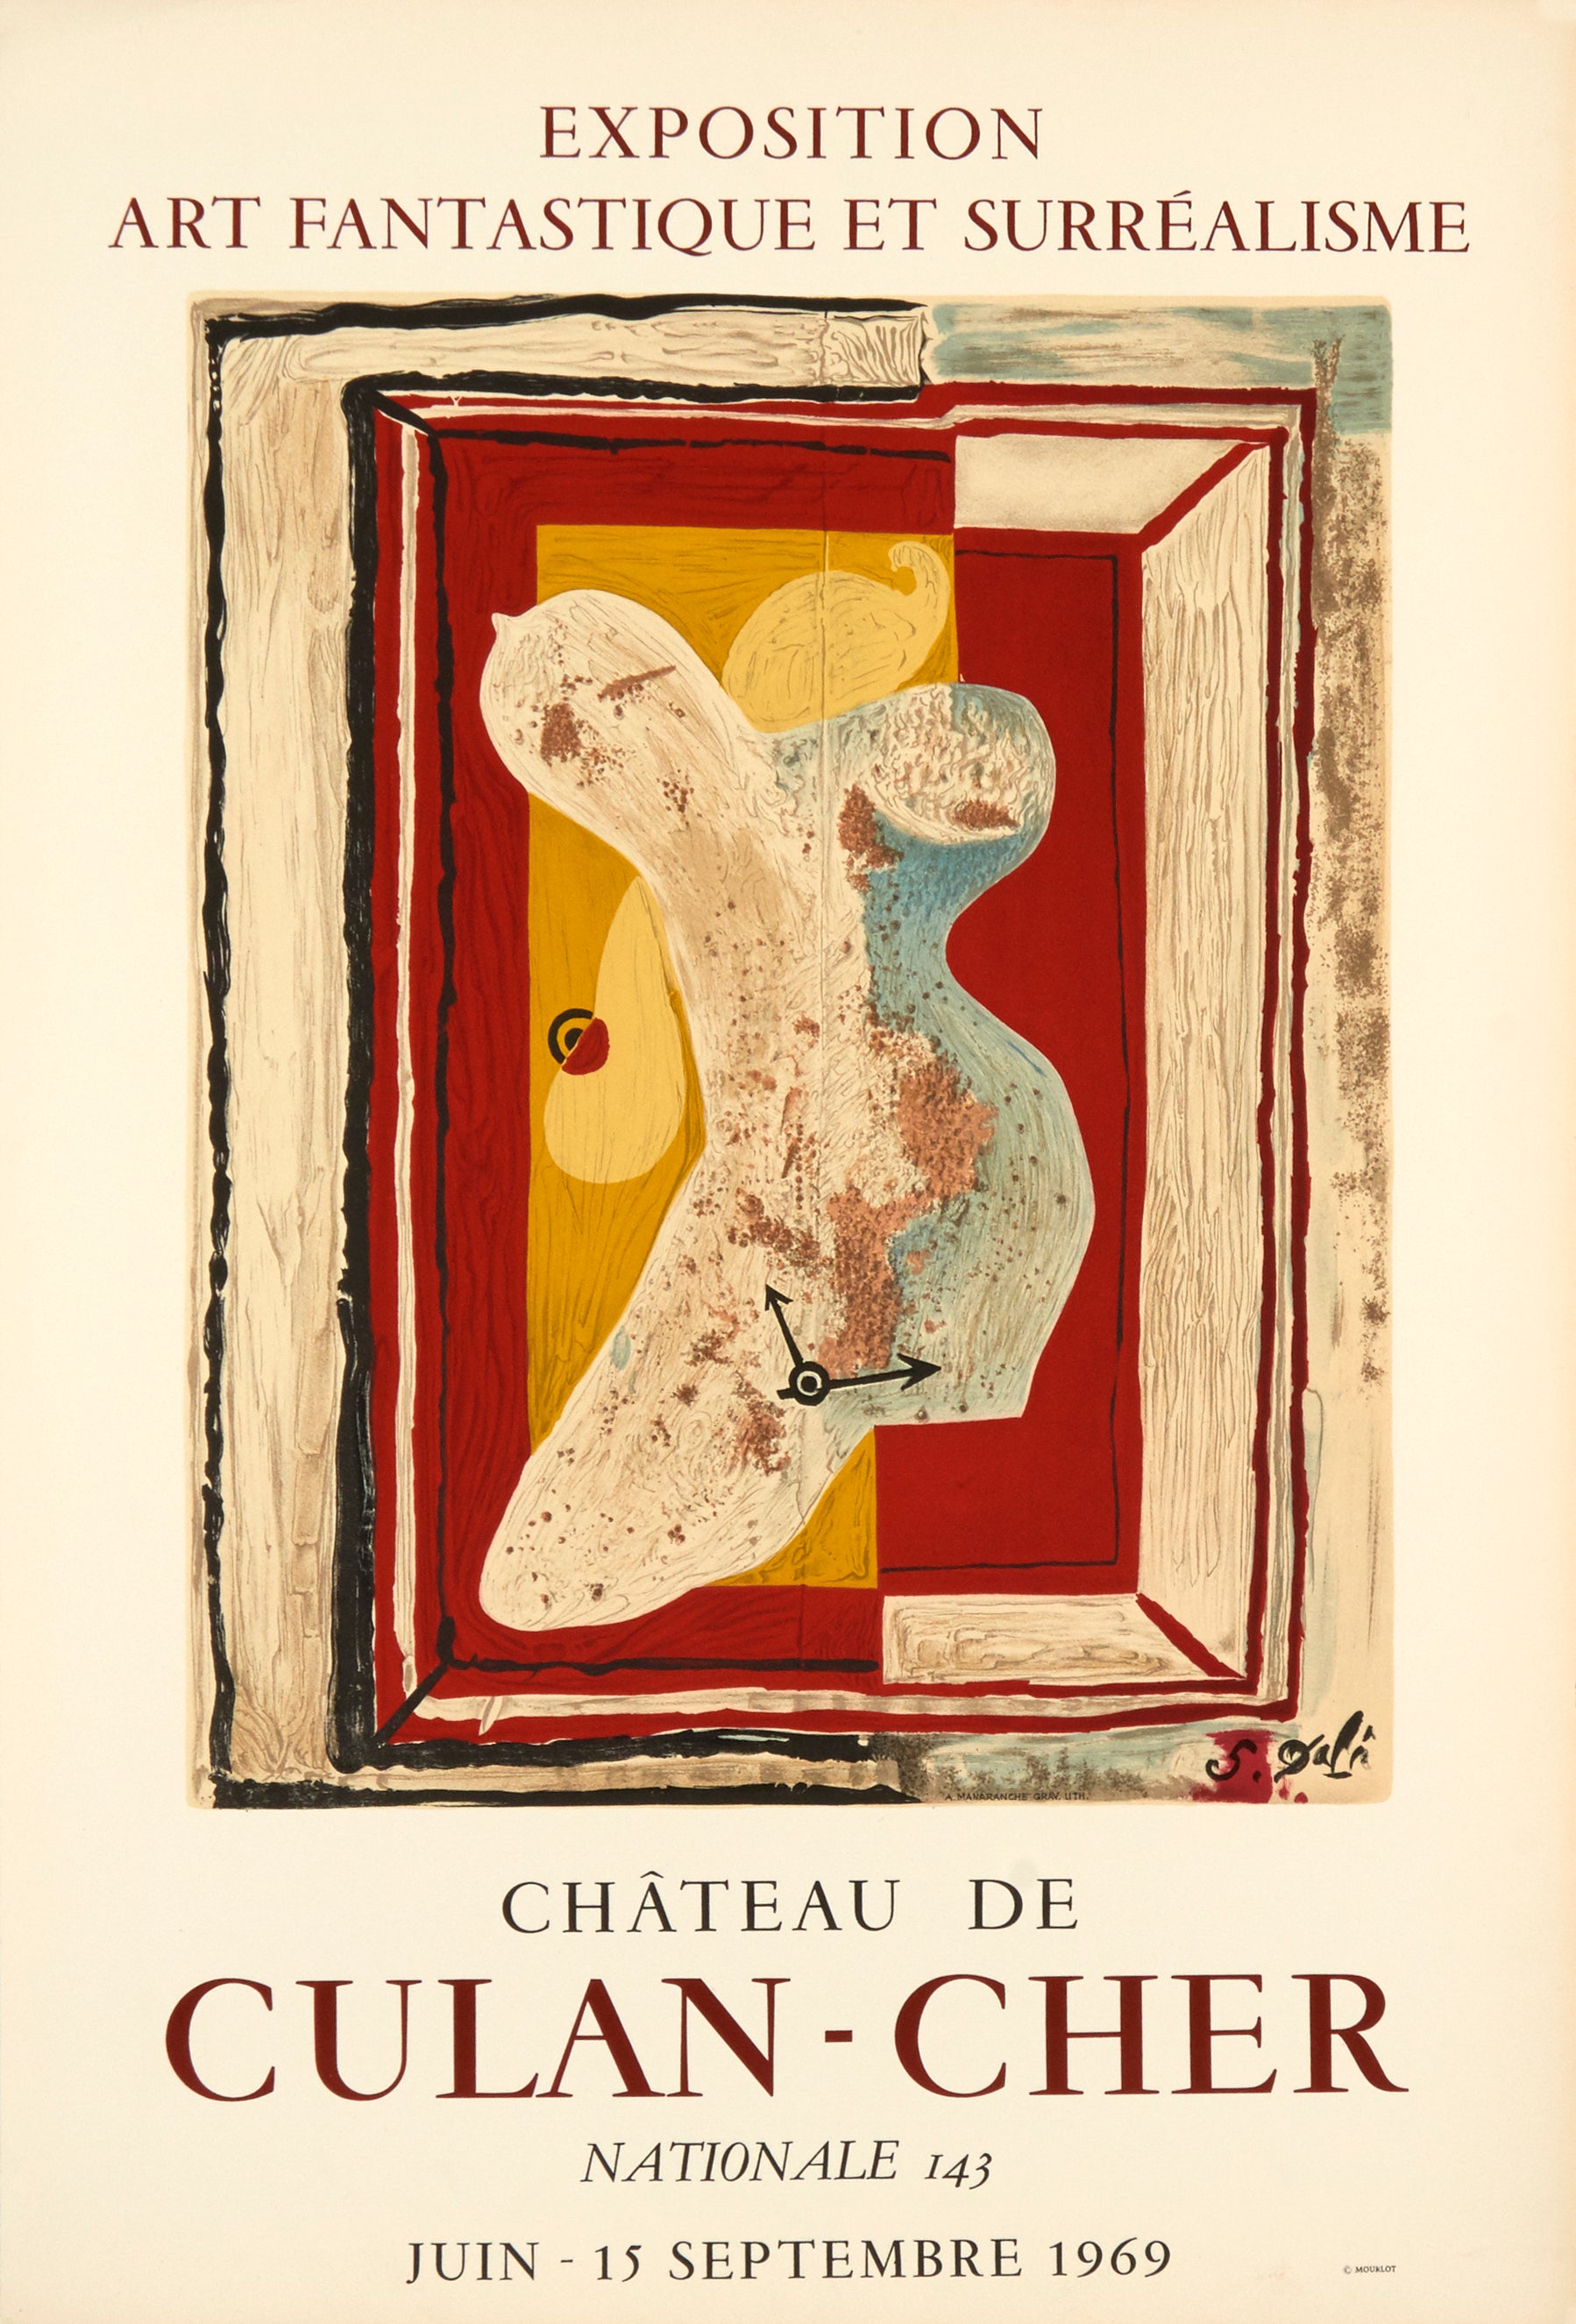 Chateau de Culan - Cher (after) Salvador Dali, 1969 - Mourlot Editions - Fine_Art - Poster - Lithograph - Wall Art - Vintage - Prints - Original